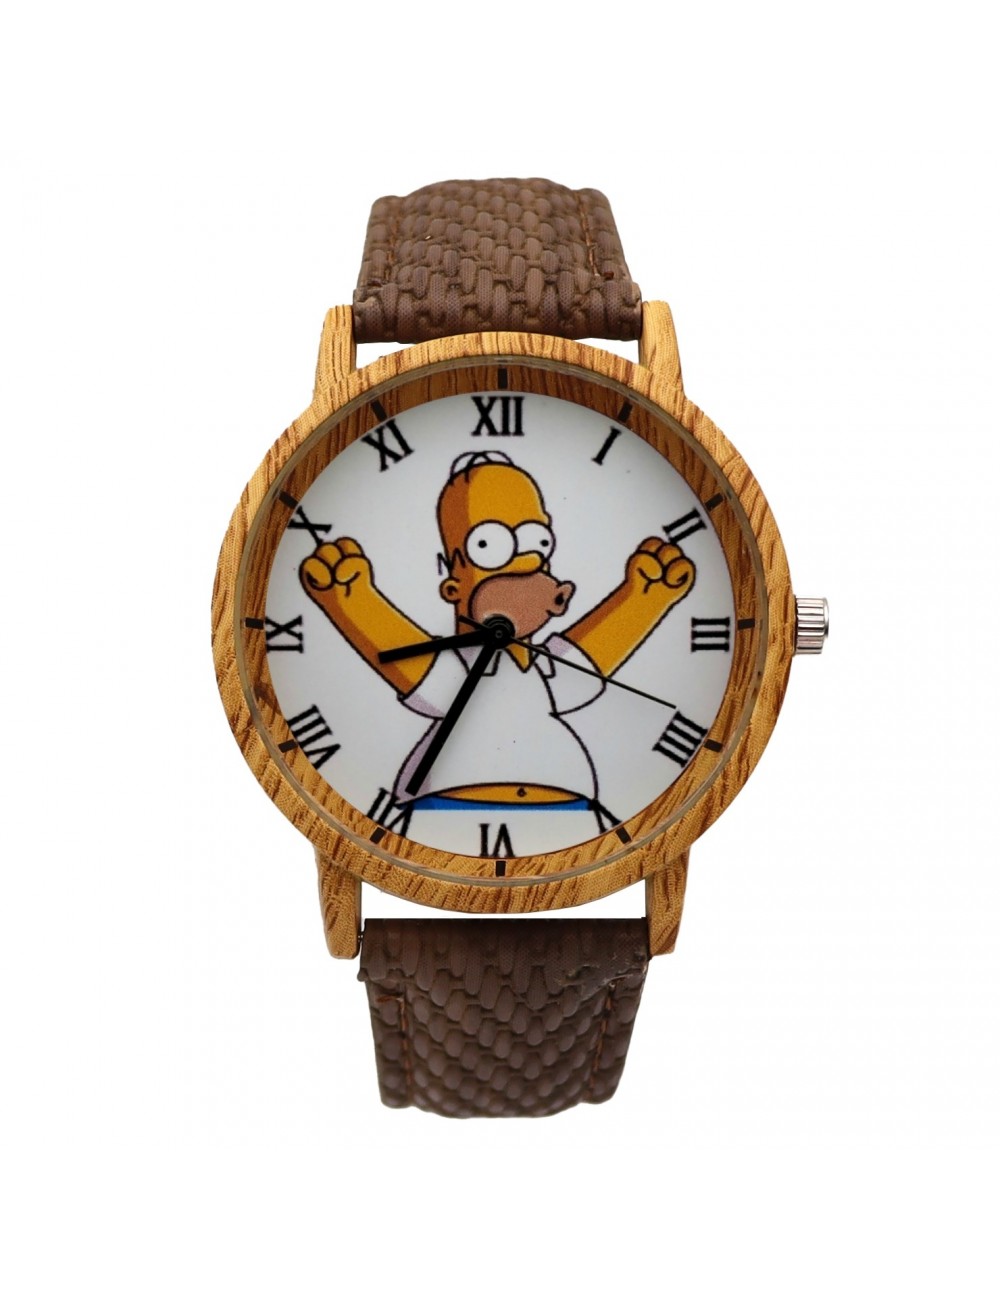 Reloj Homero Simpson Dayoshop $ 41.900